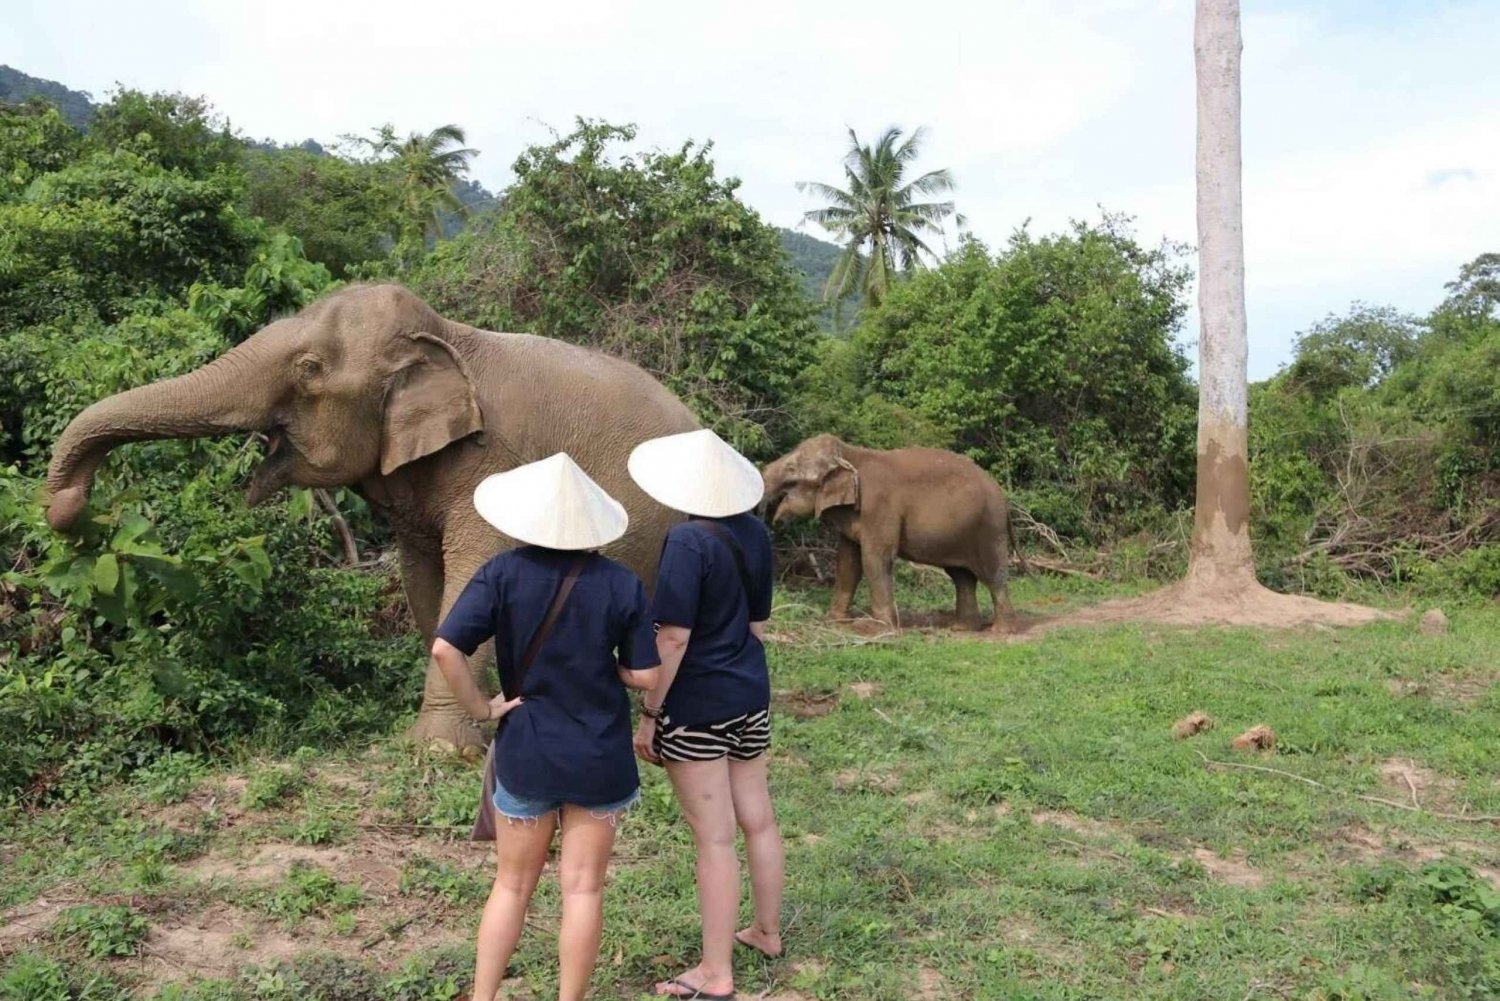 Koh Samui: Elephant Sanctuary and more - Full Day